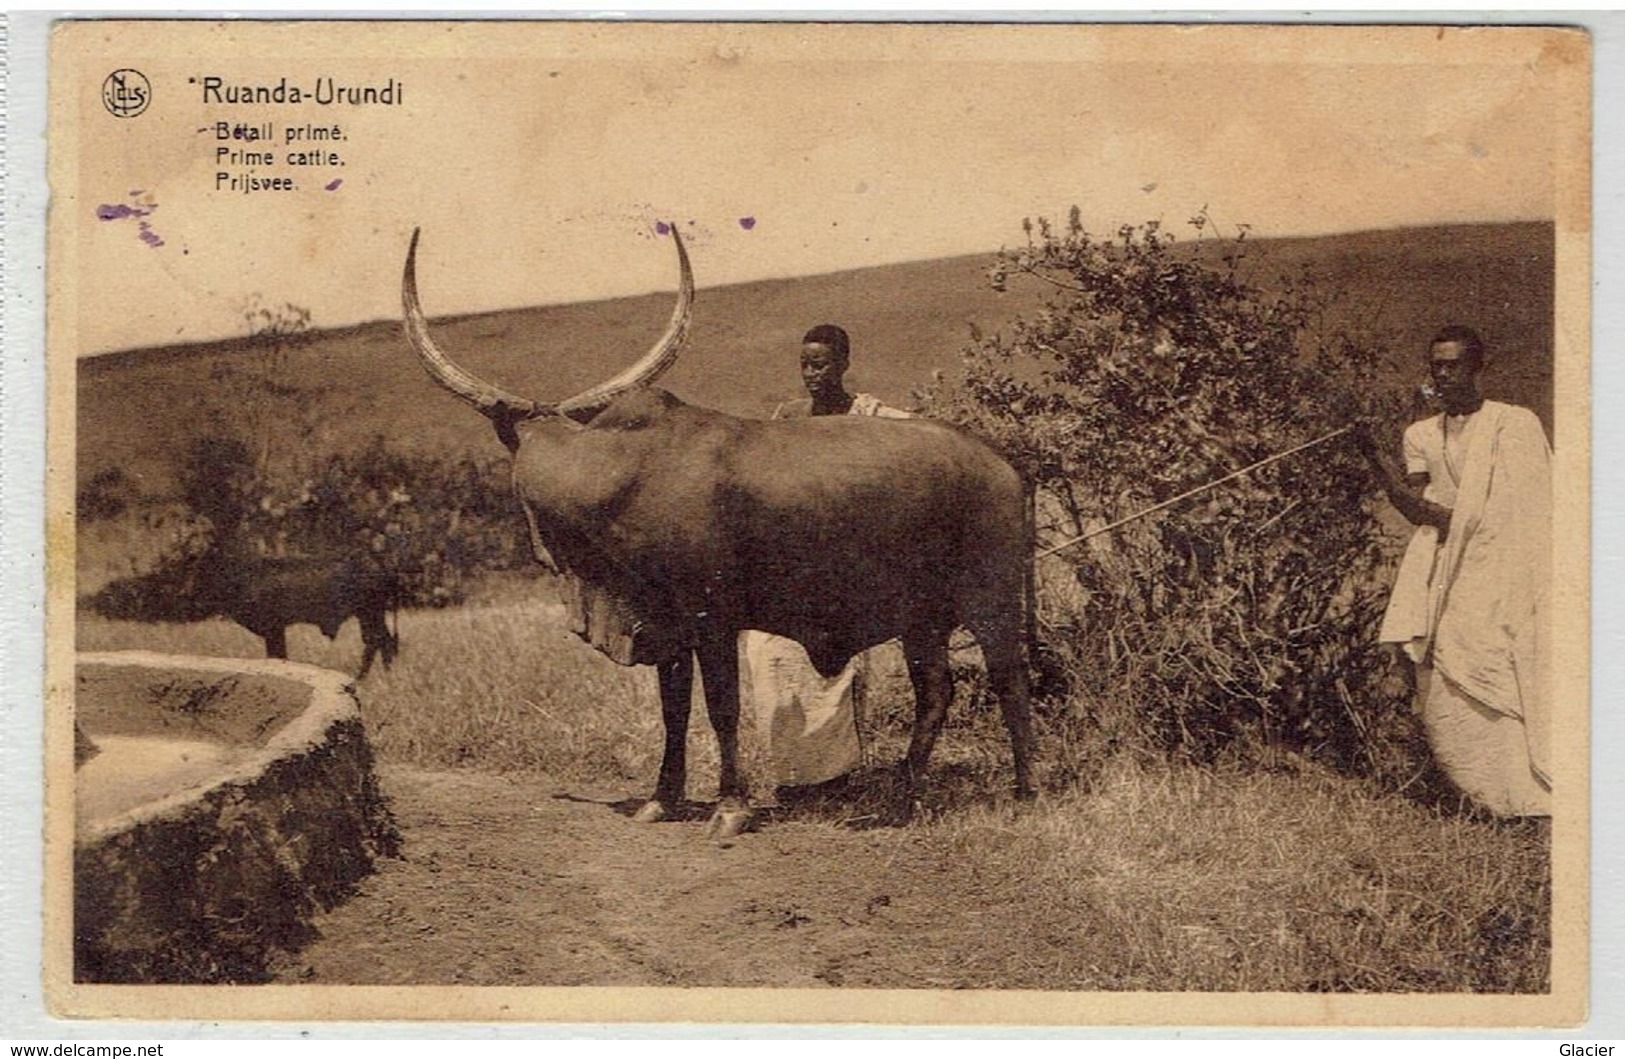 RUANDA-URUNDI - Bétail Primé - Prijsvee - Prime Cattle - Ruanda- Urundi